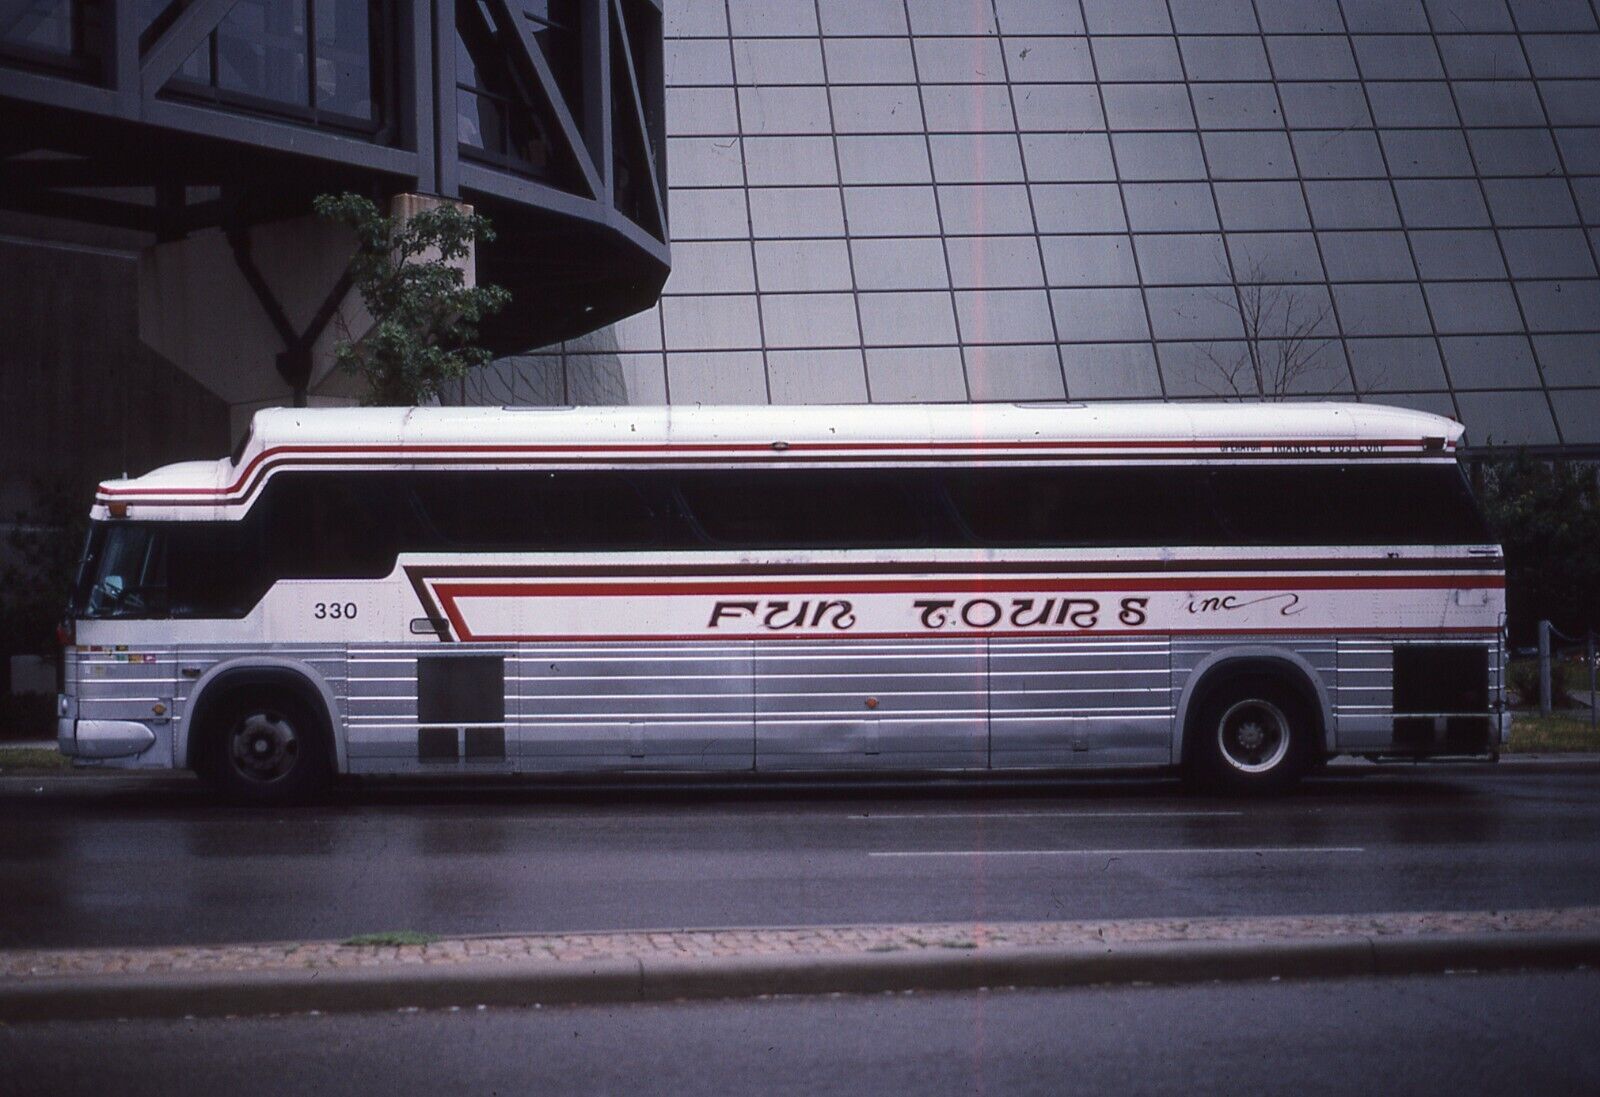 Original Bus Slide Fun Tours  Inc #330 1987 #25